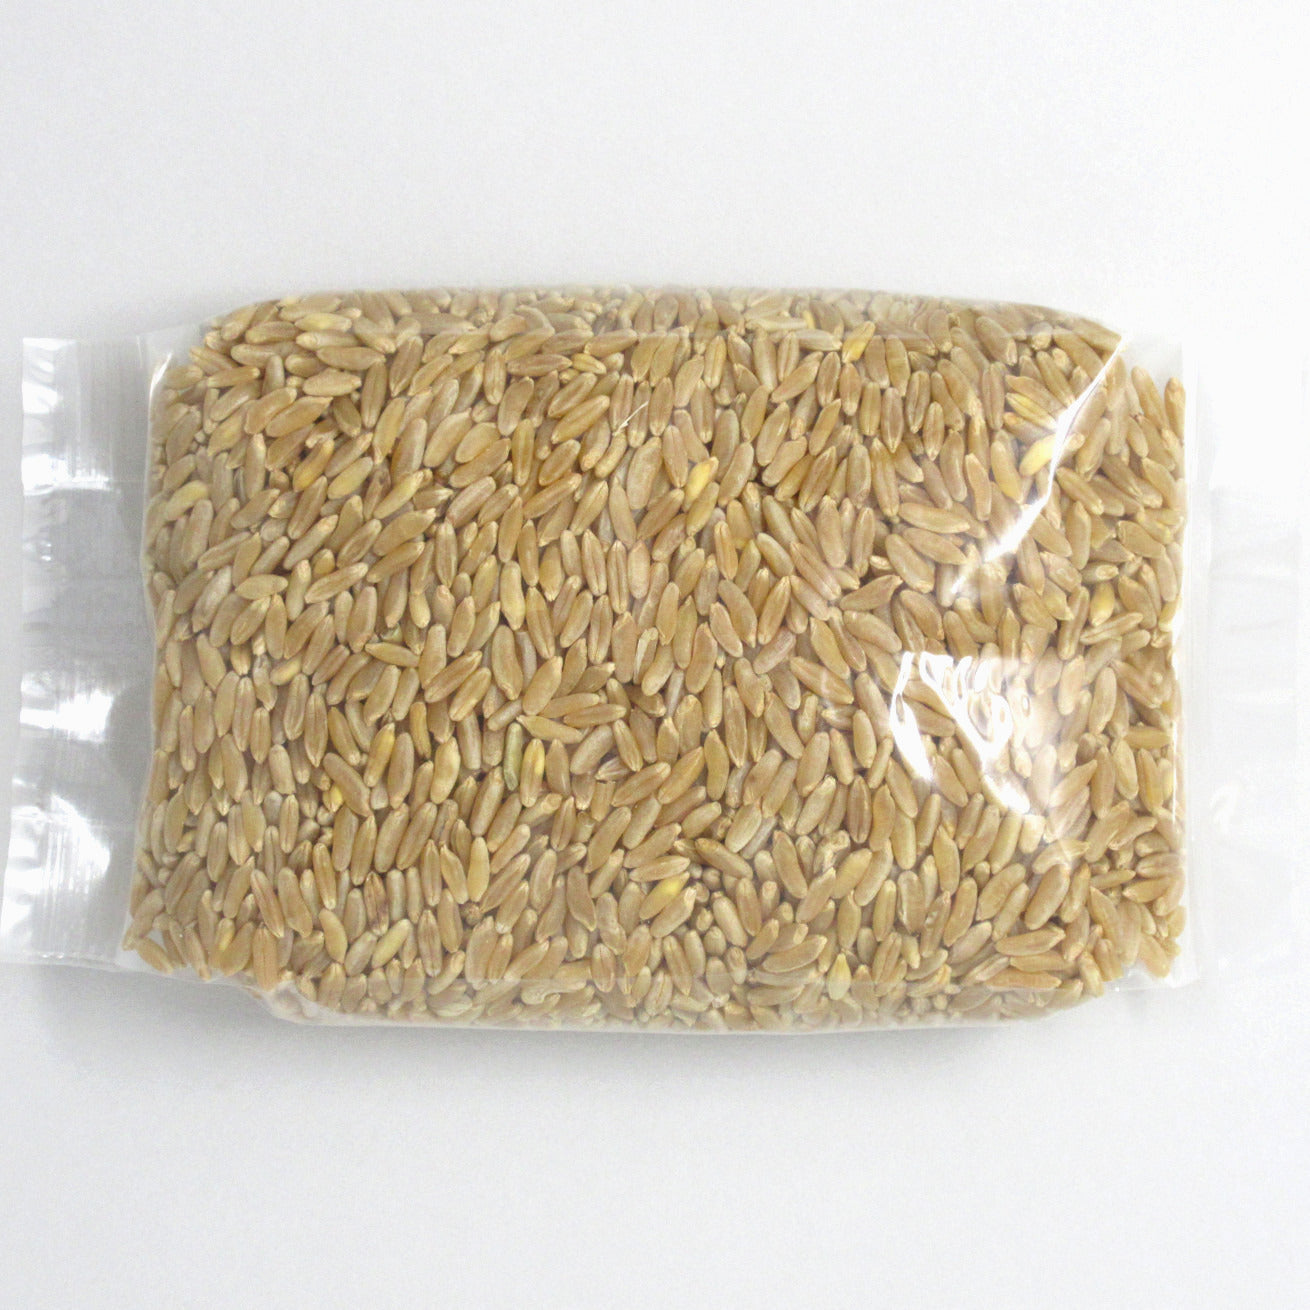 Flour Barrel product image - Kamut Kernels